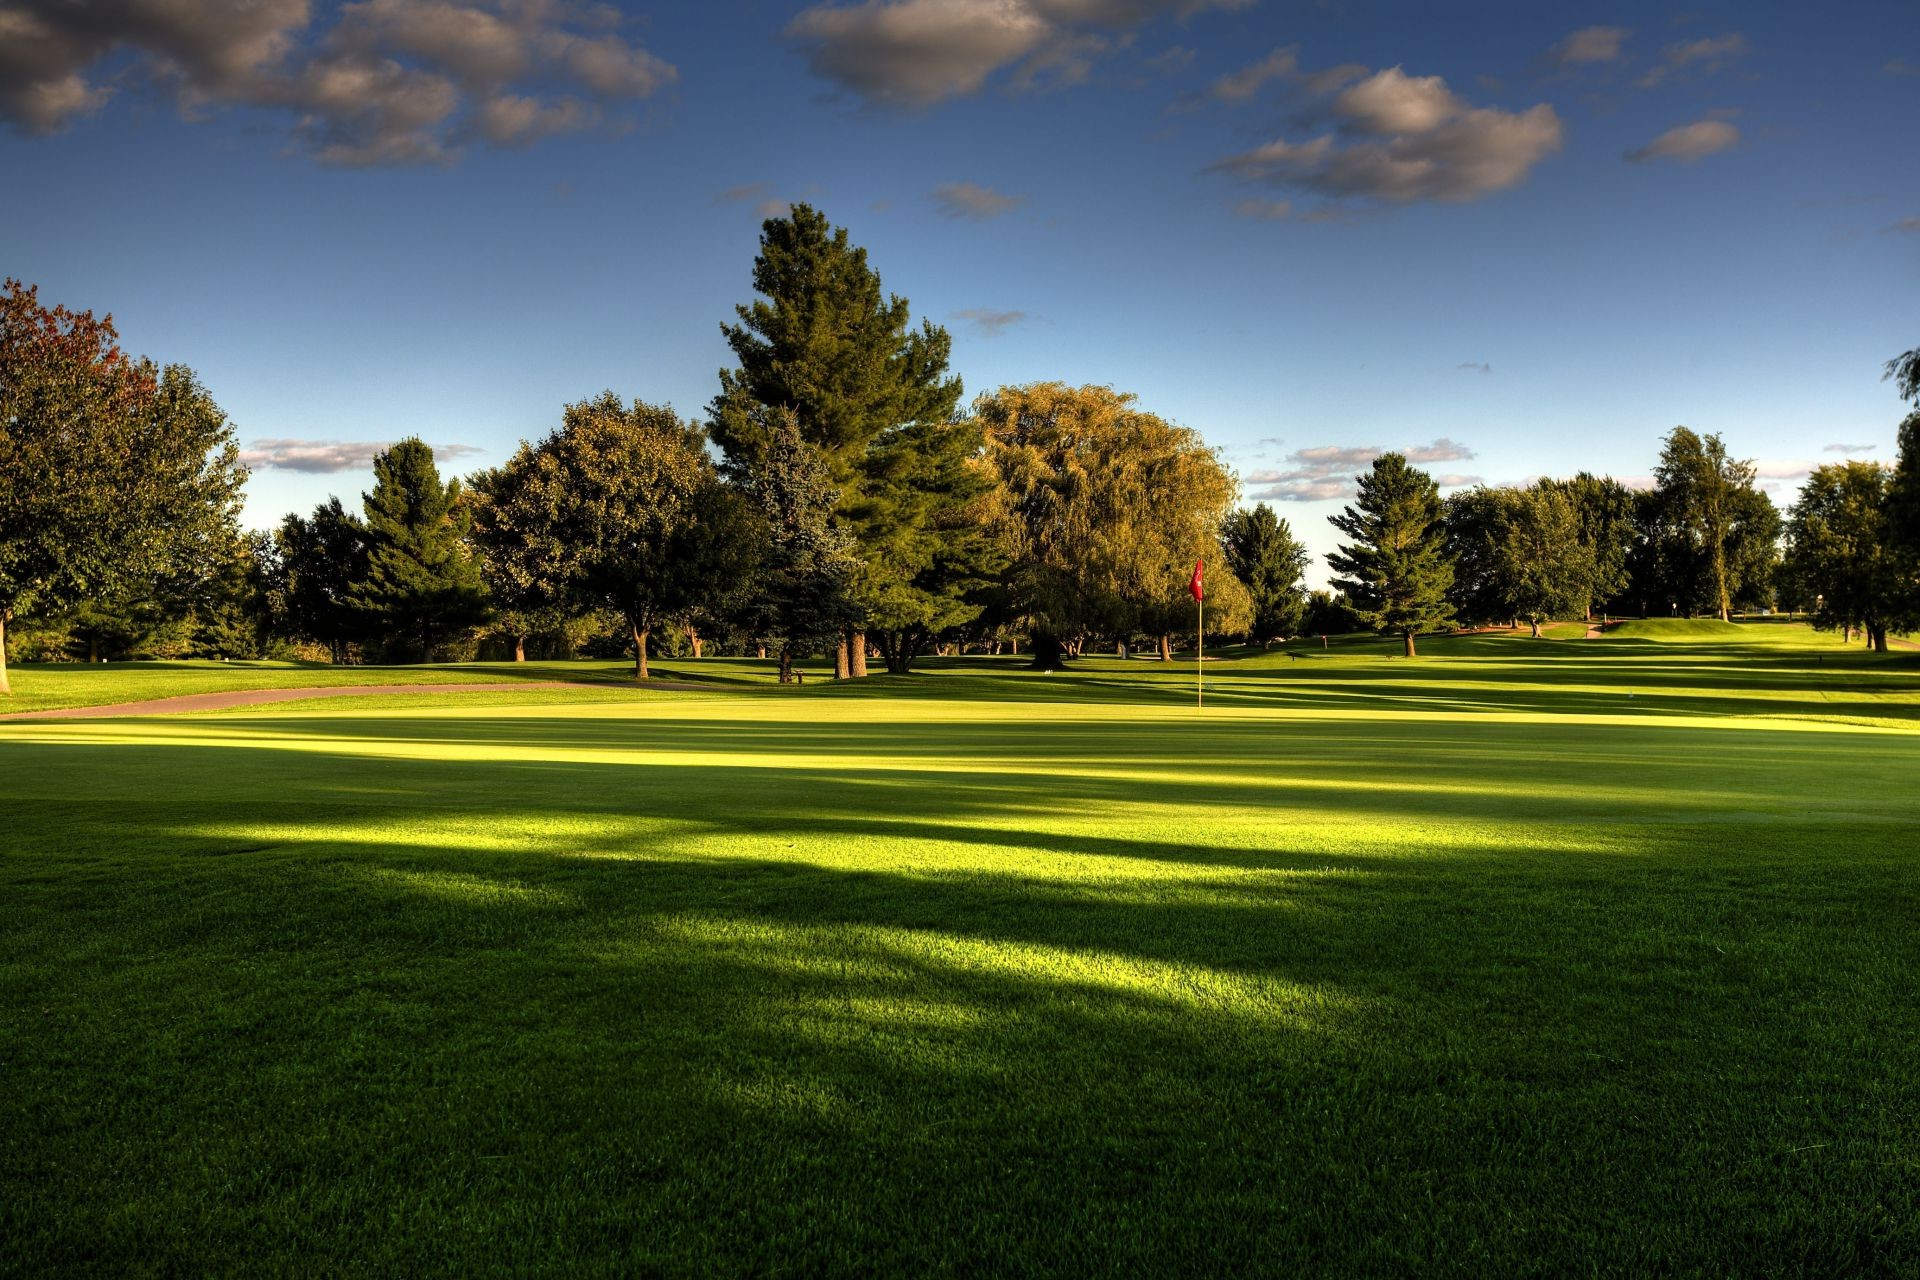 fields meadows and valleys golf grass putt landscape tree lawn fairway golfer course tee nature outdoors park